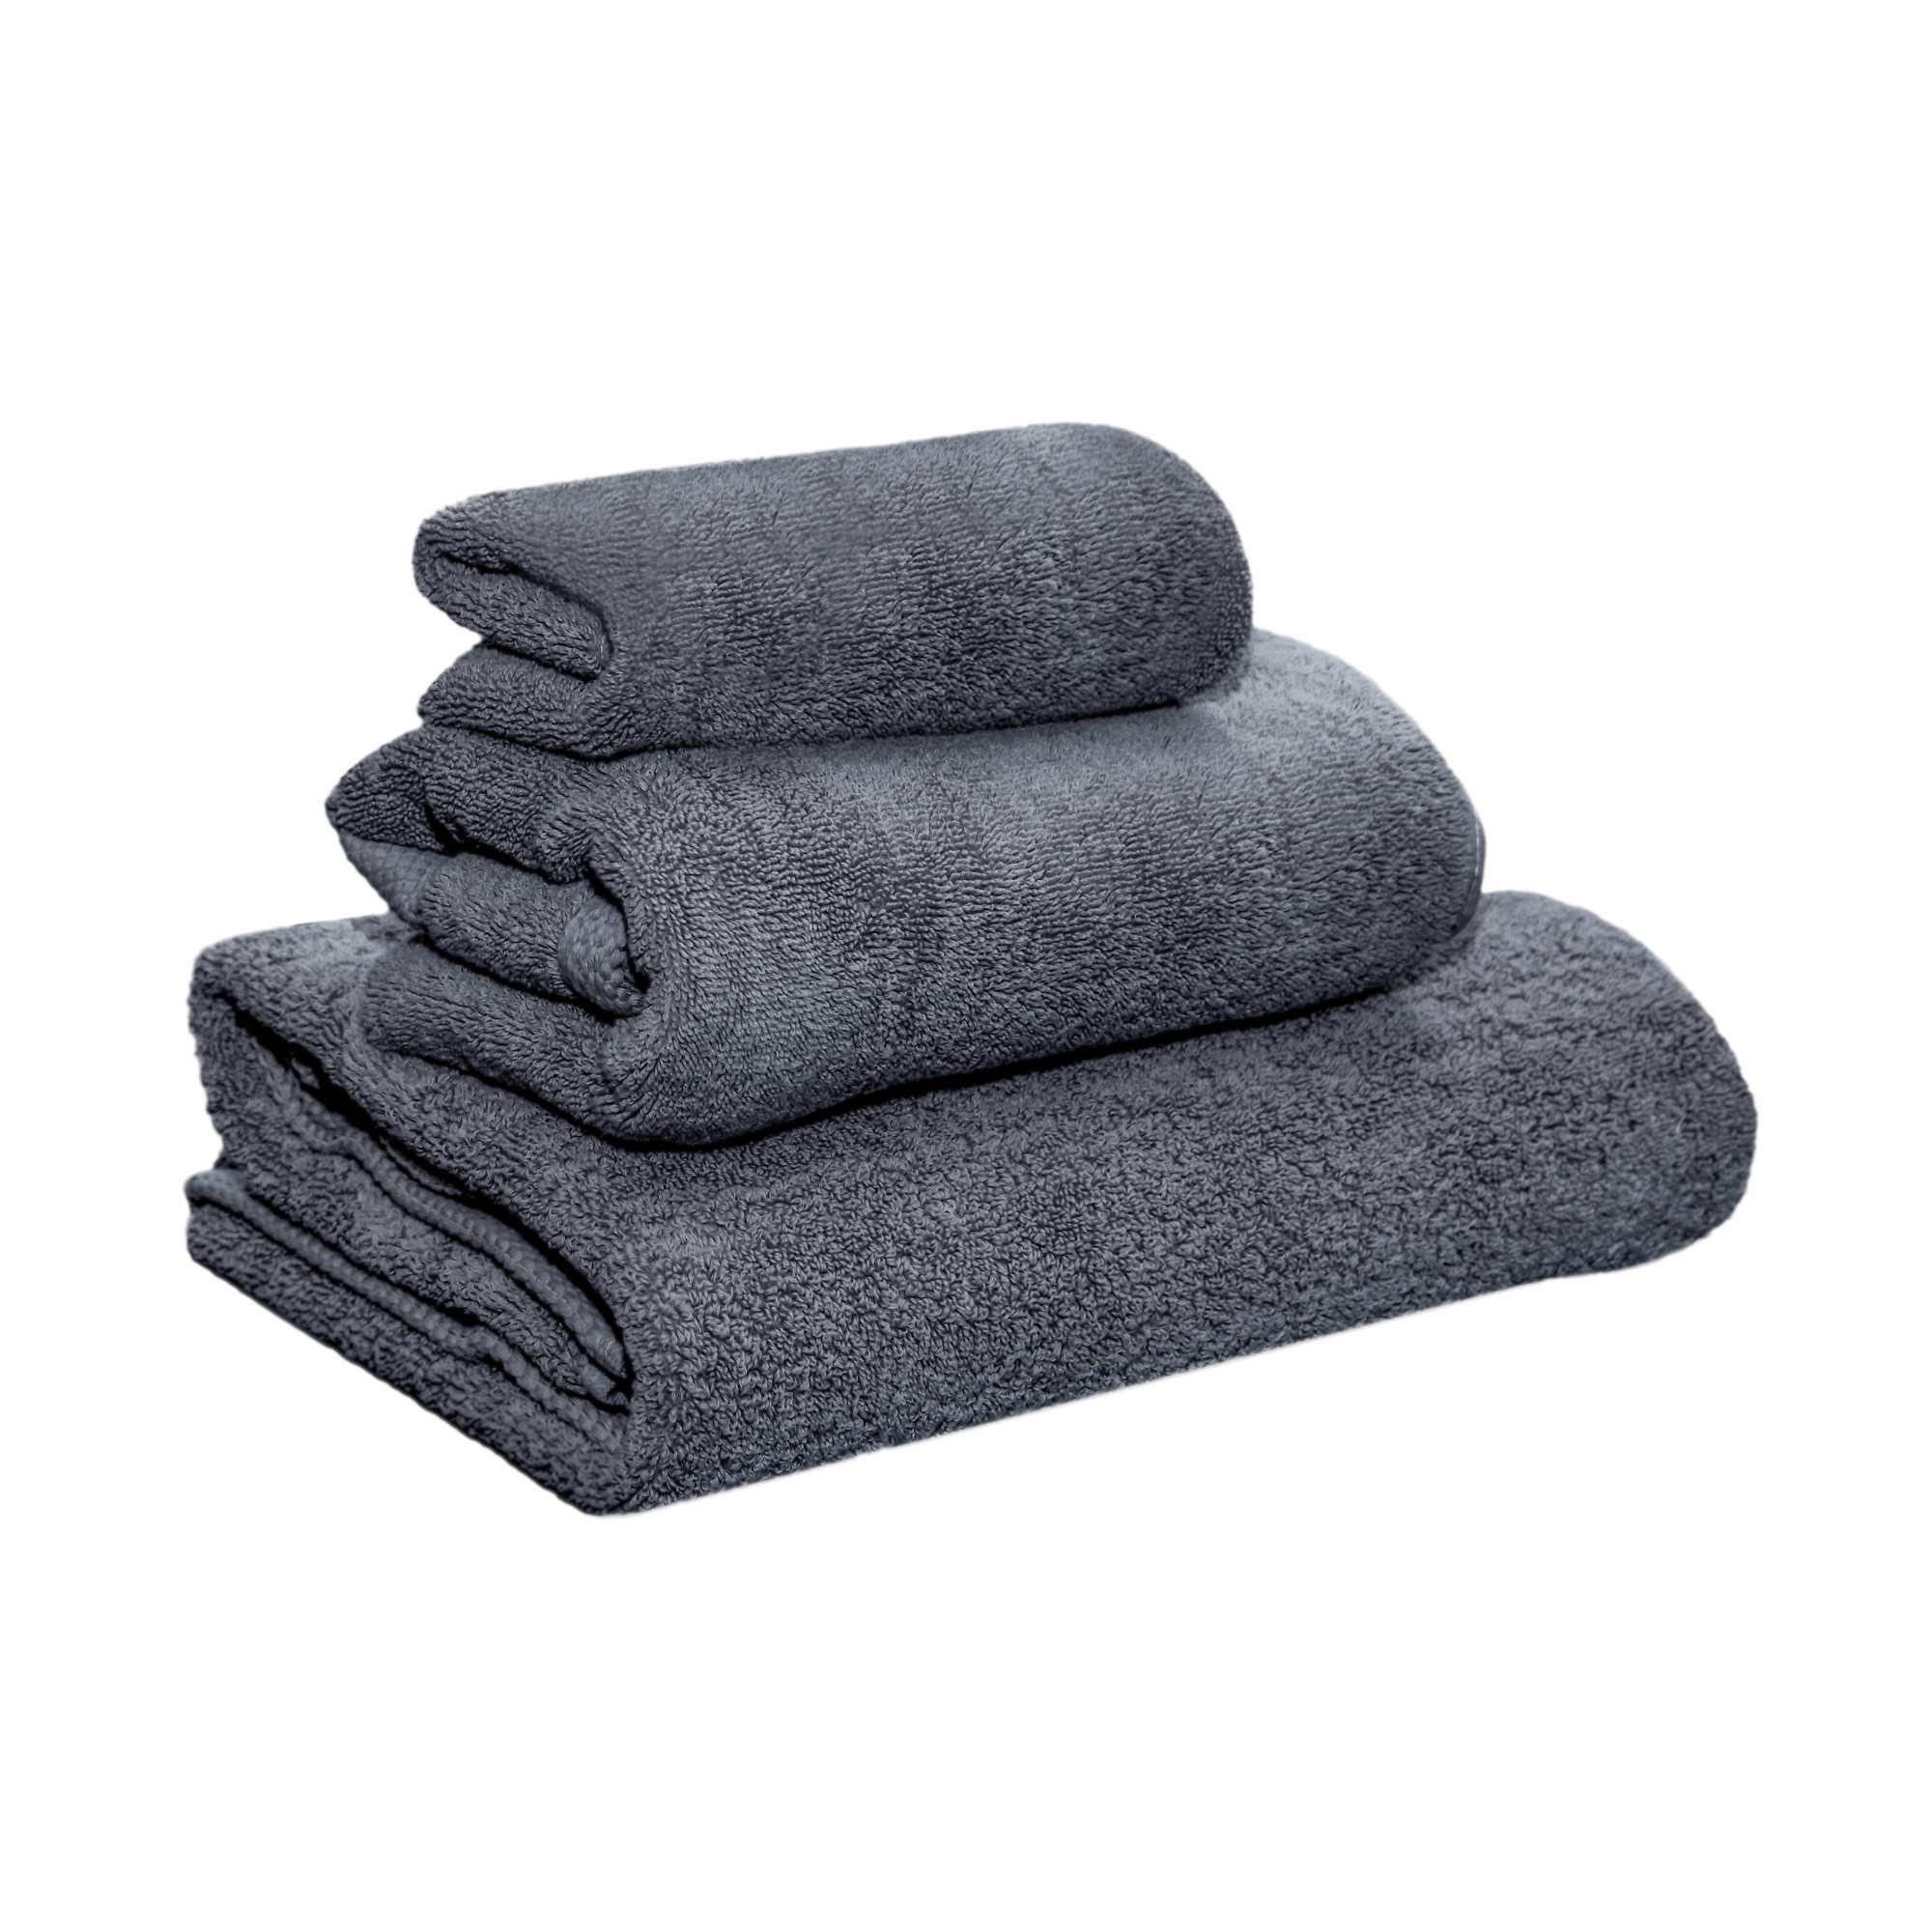 Terry towel 50x90, dark asphalt, 100% cotton